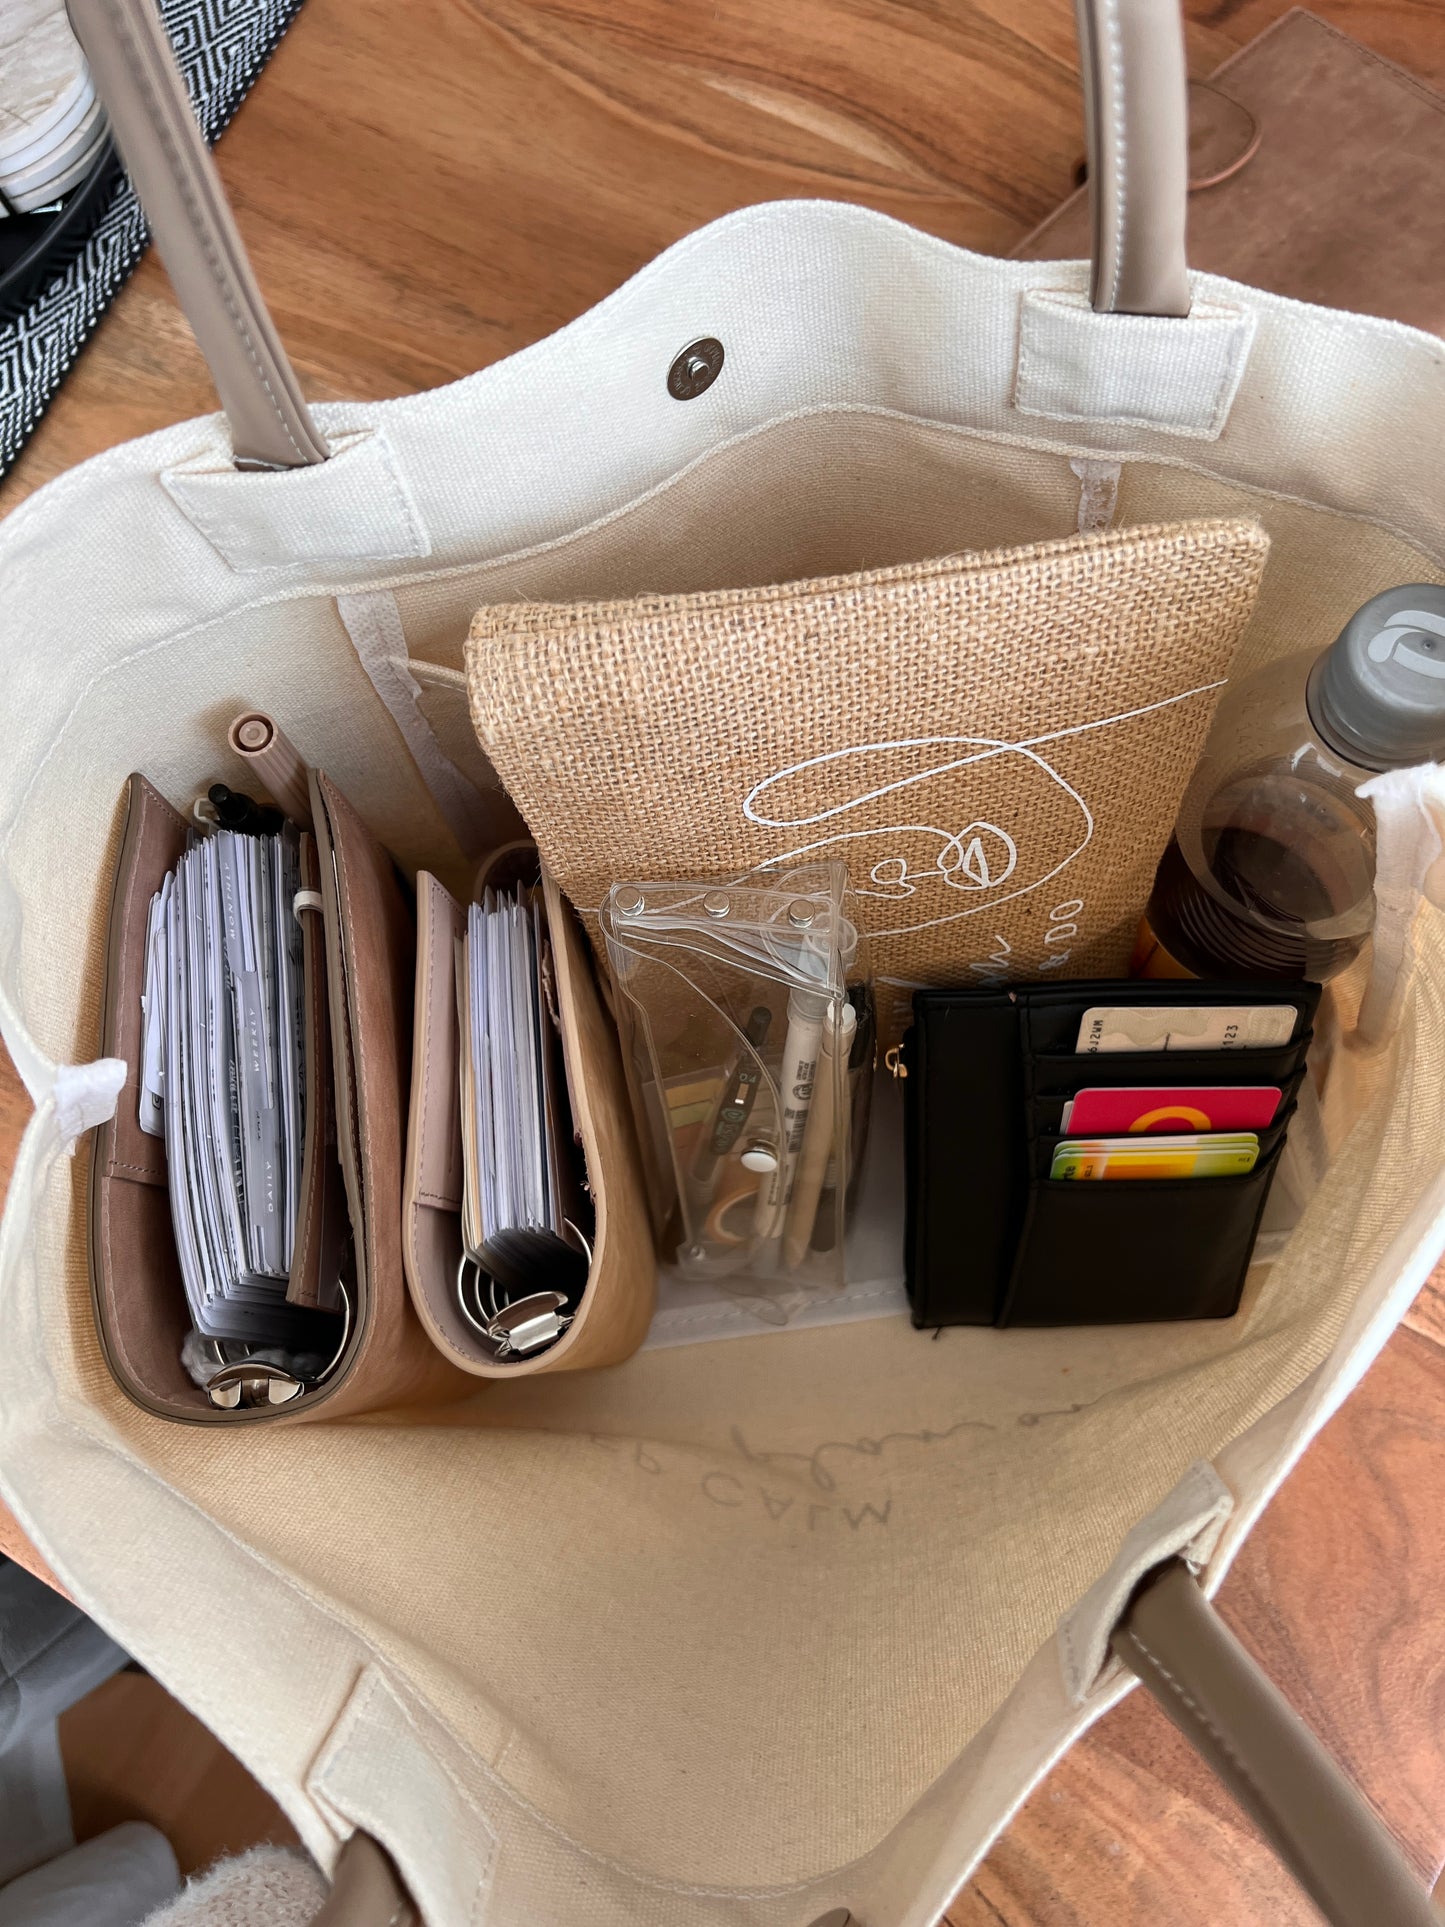 Canvas Tote Bag • Keep Calm & Plan On • PU Leather Handles